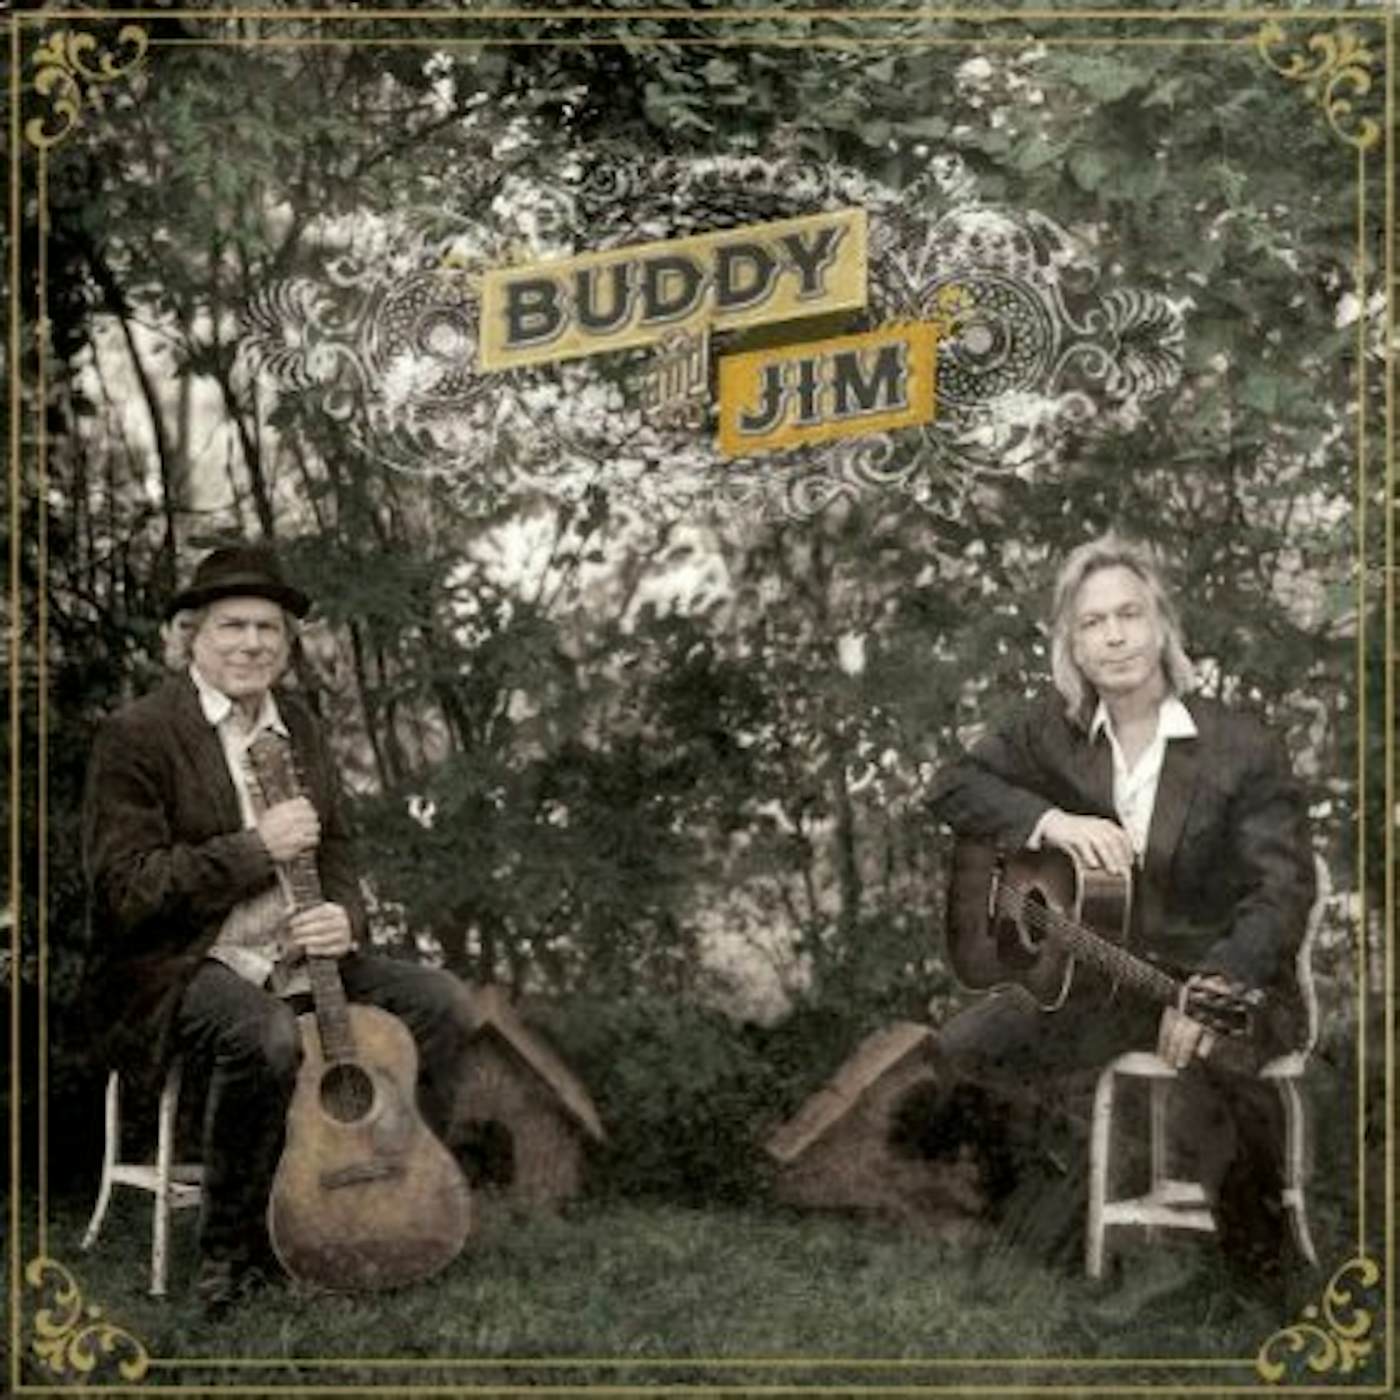 Buddy Miller & Jim Lauderdale Buddy And Jim Vinyl Record